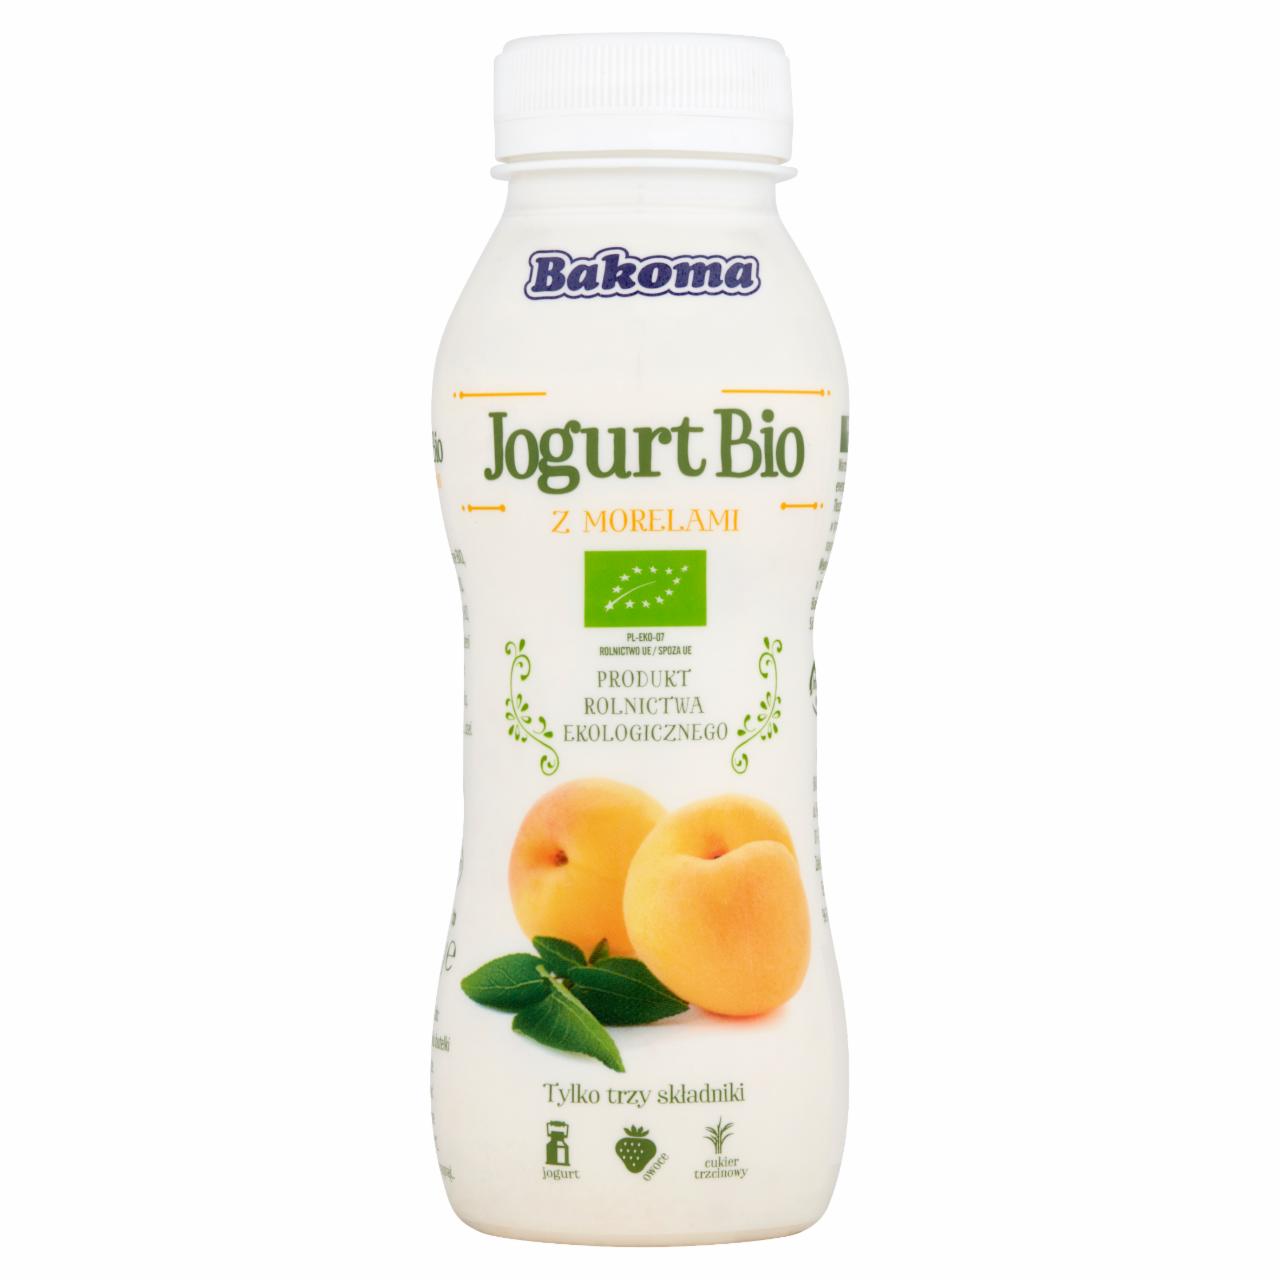 Zdjęcia - Bakoma Jogurt Bio z morelami 230 g